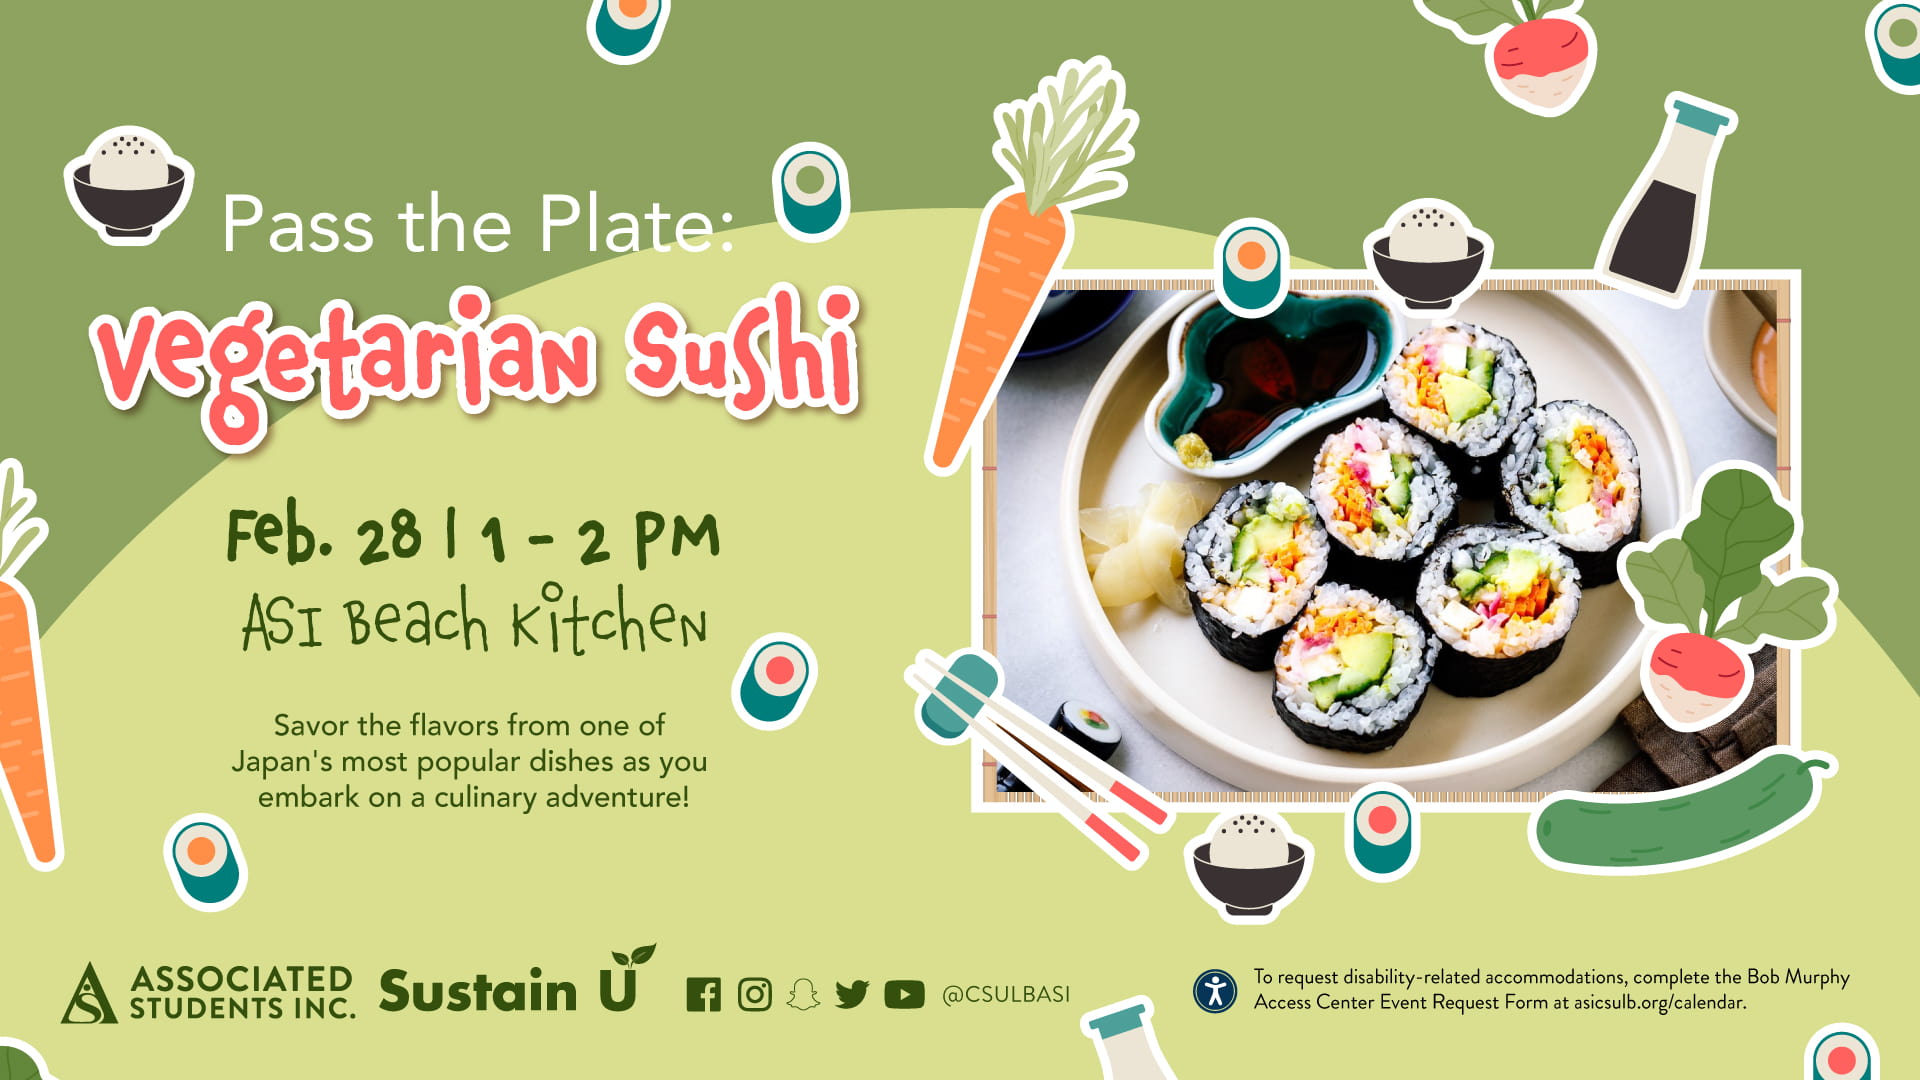 Pass the Plate Vegetarian Sushi
                